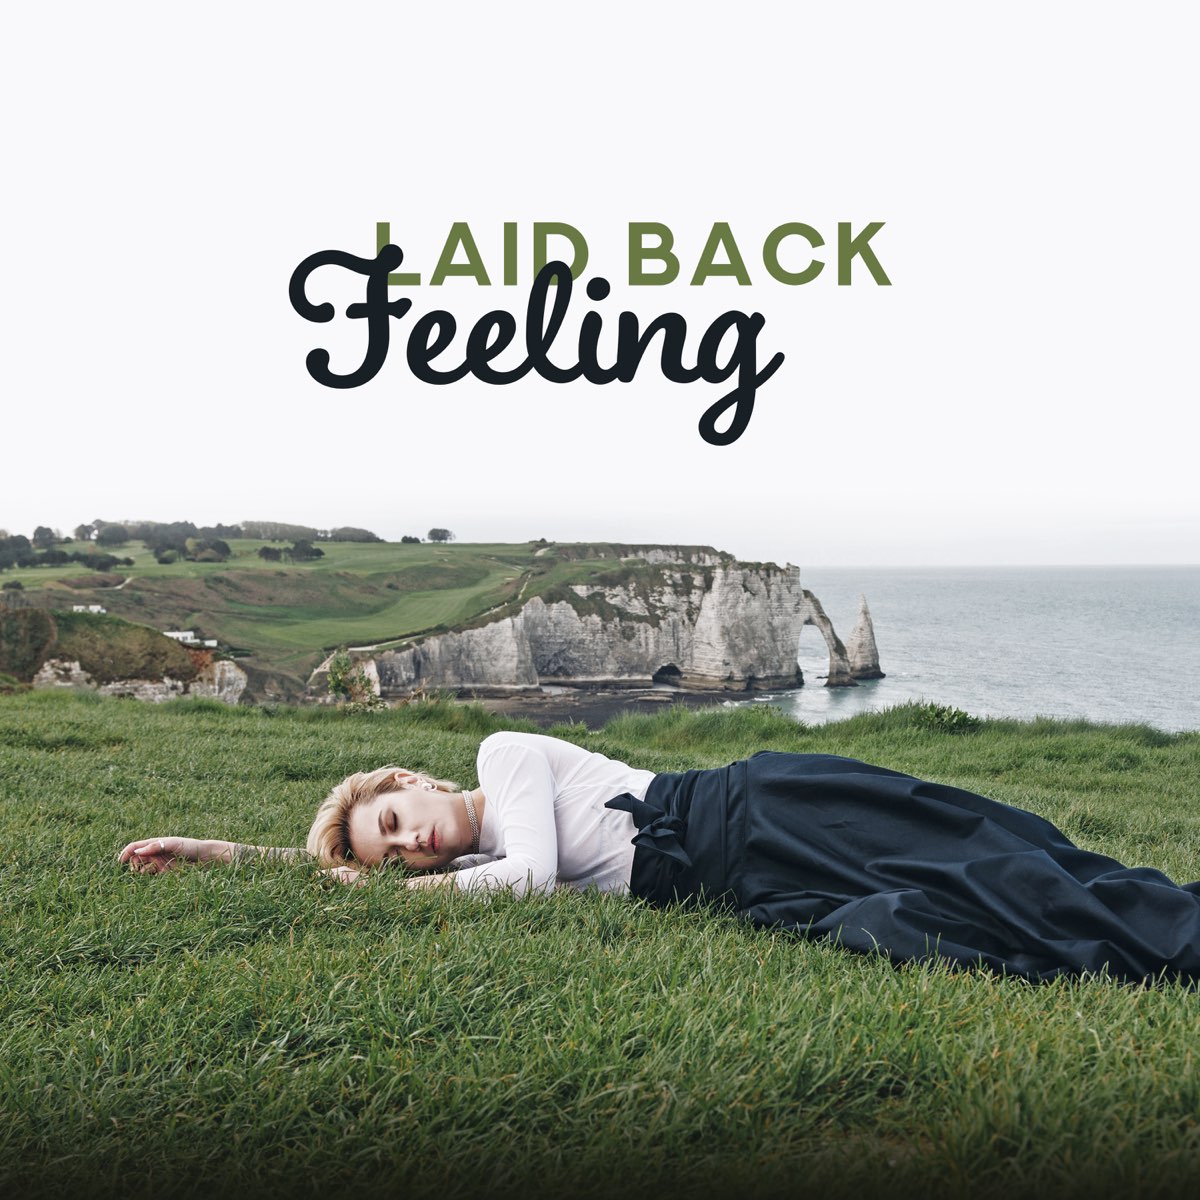 Feeling back песня. Feeling бак. Laid back. Laid back - Healing feeling (2019).